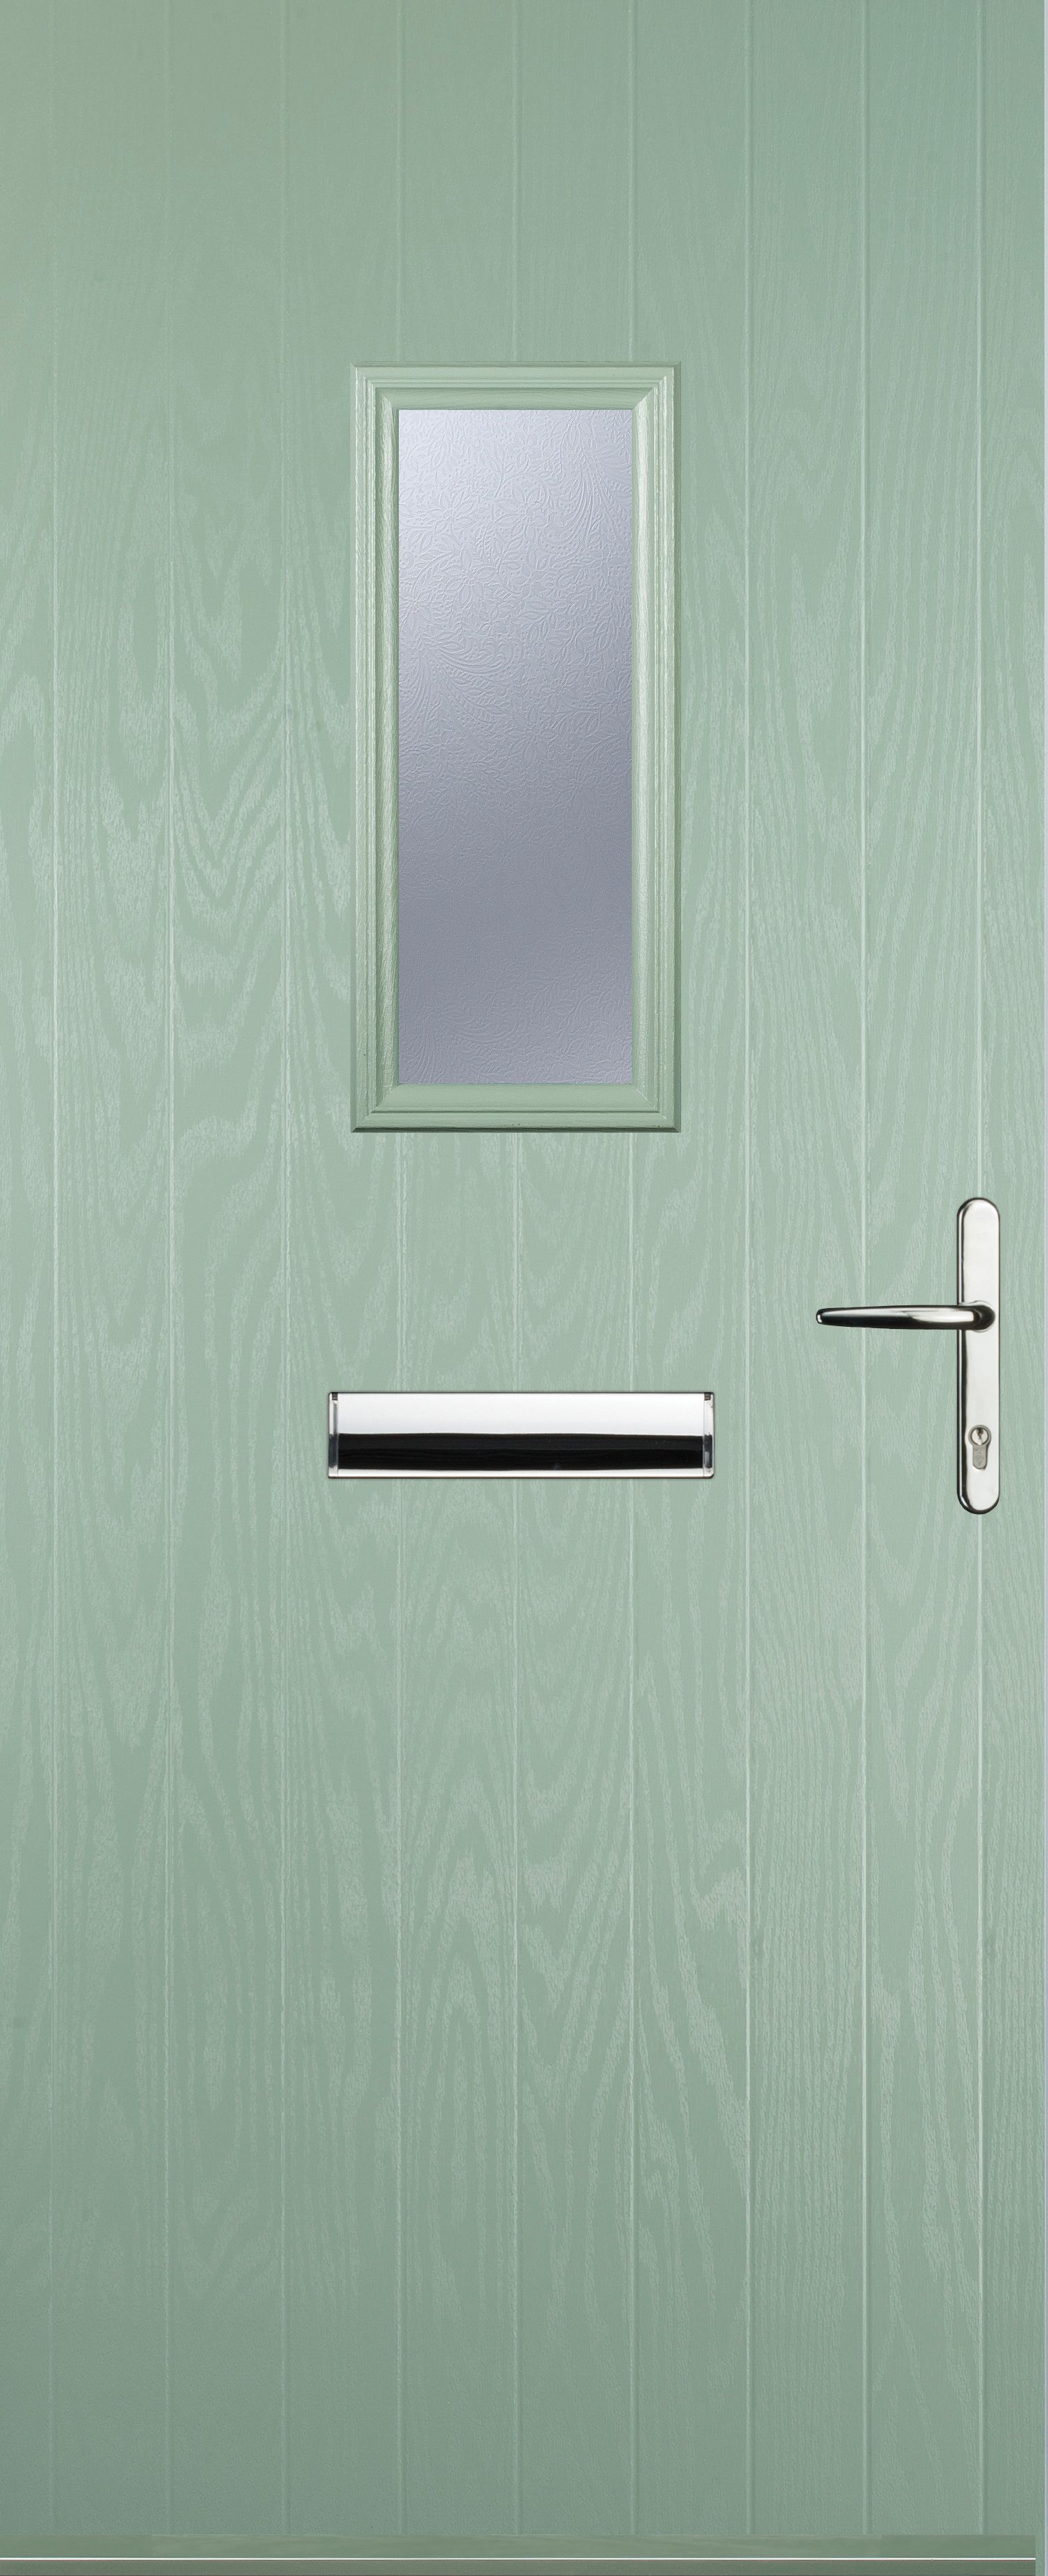 Image of Euramax 1 Square Left Hand Chartwell Green Composite Door - 840 x 2100mm